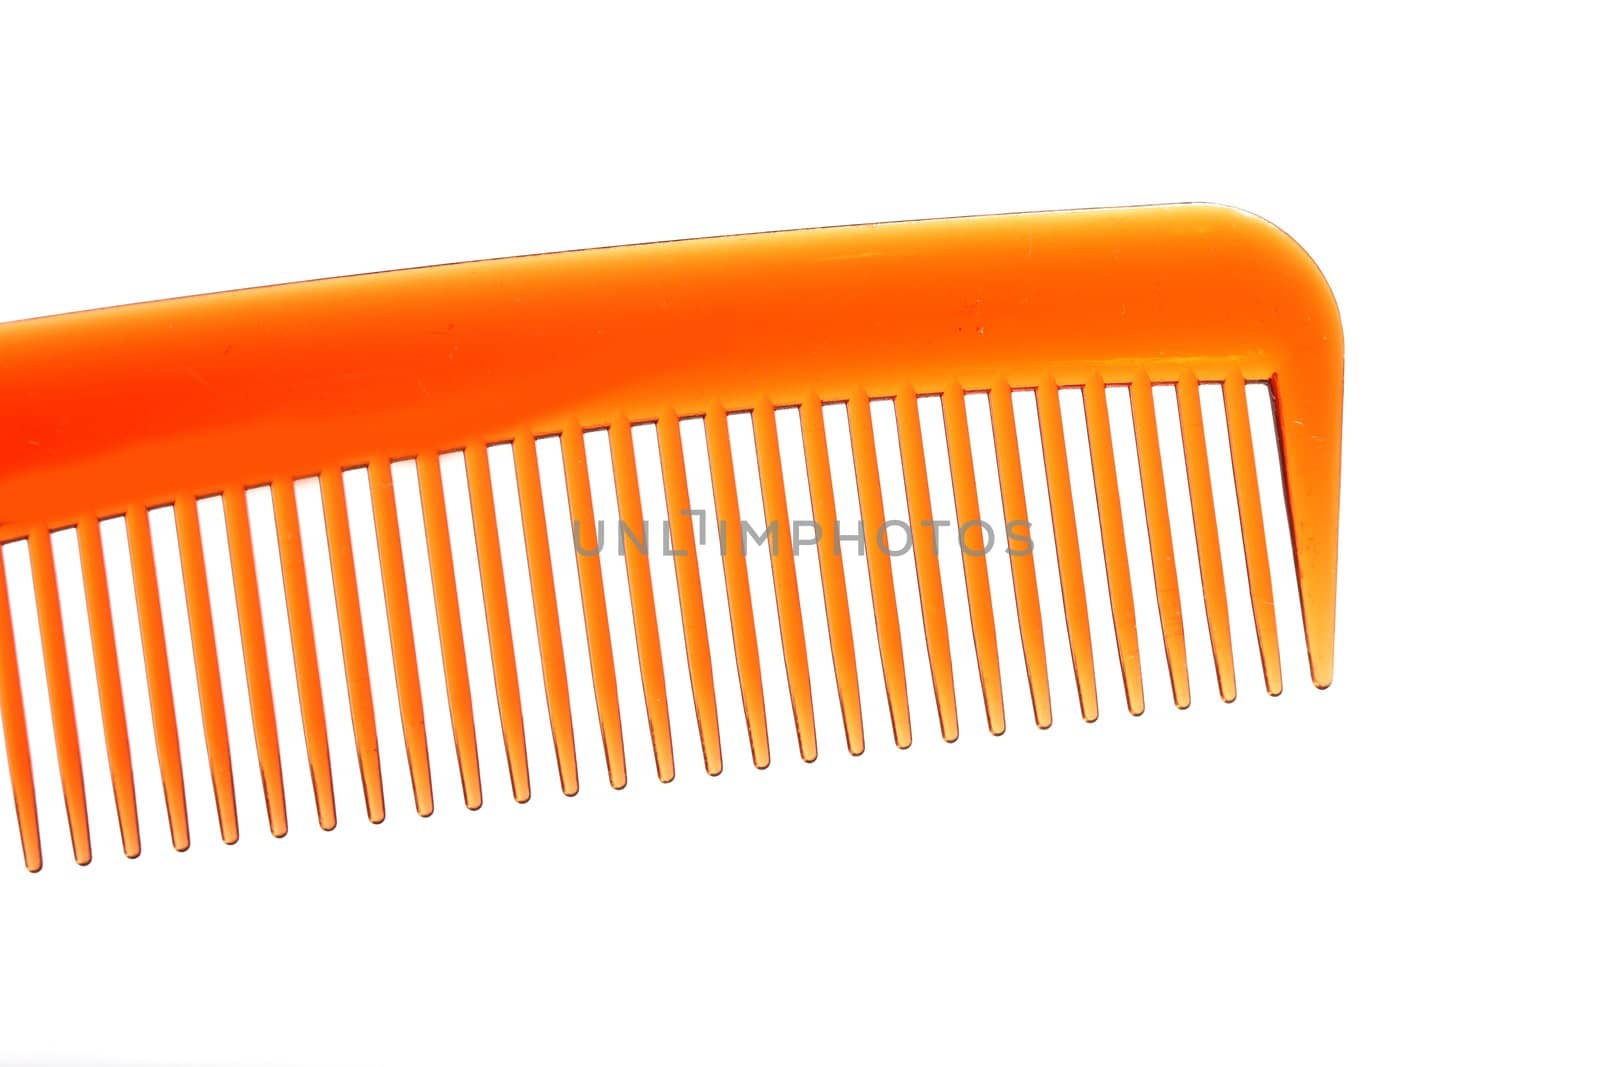 plain isolated plastic comb by Teka77